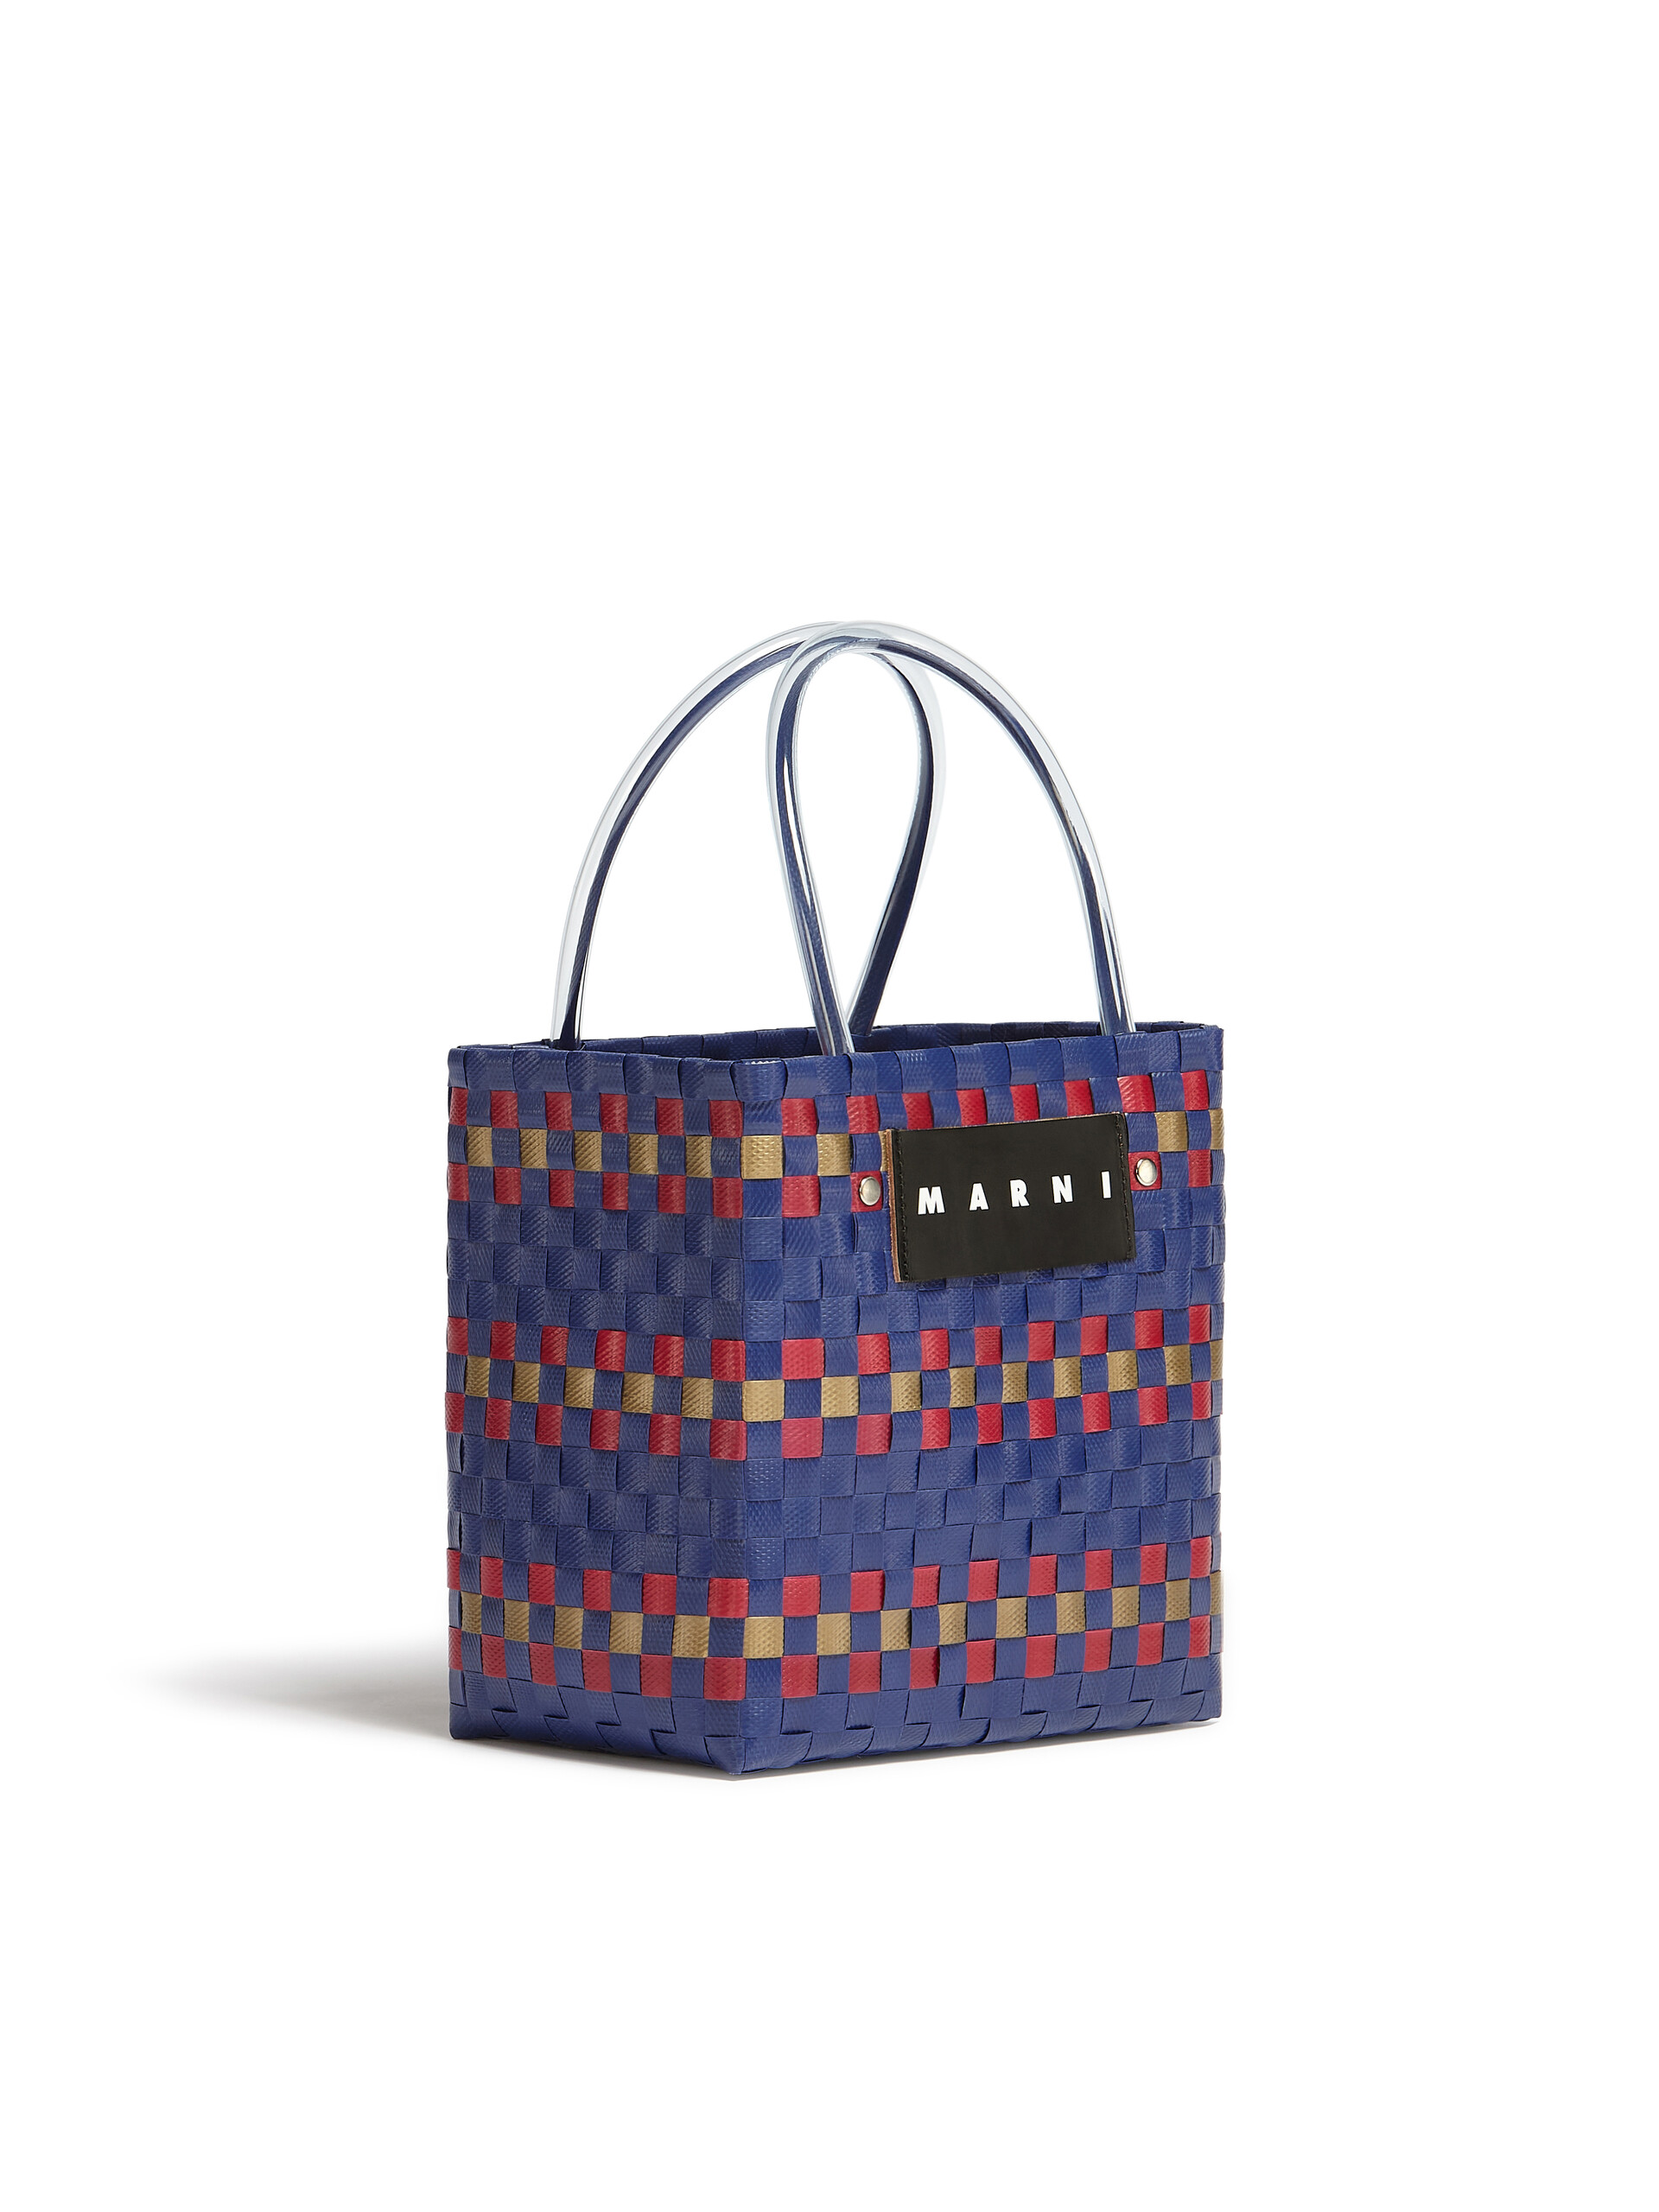 MARNI MARKET shopping bag in blue polypropylene - Bags - Image 2